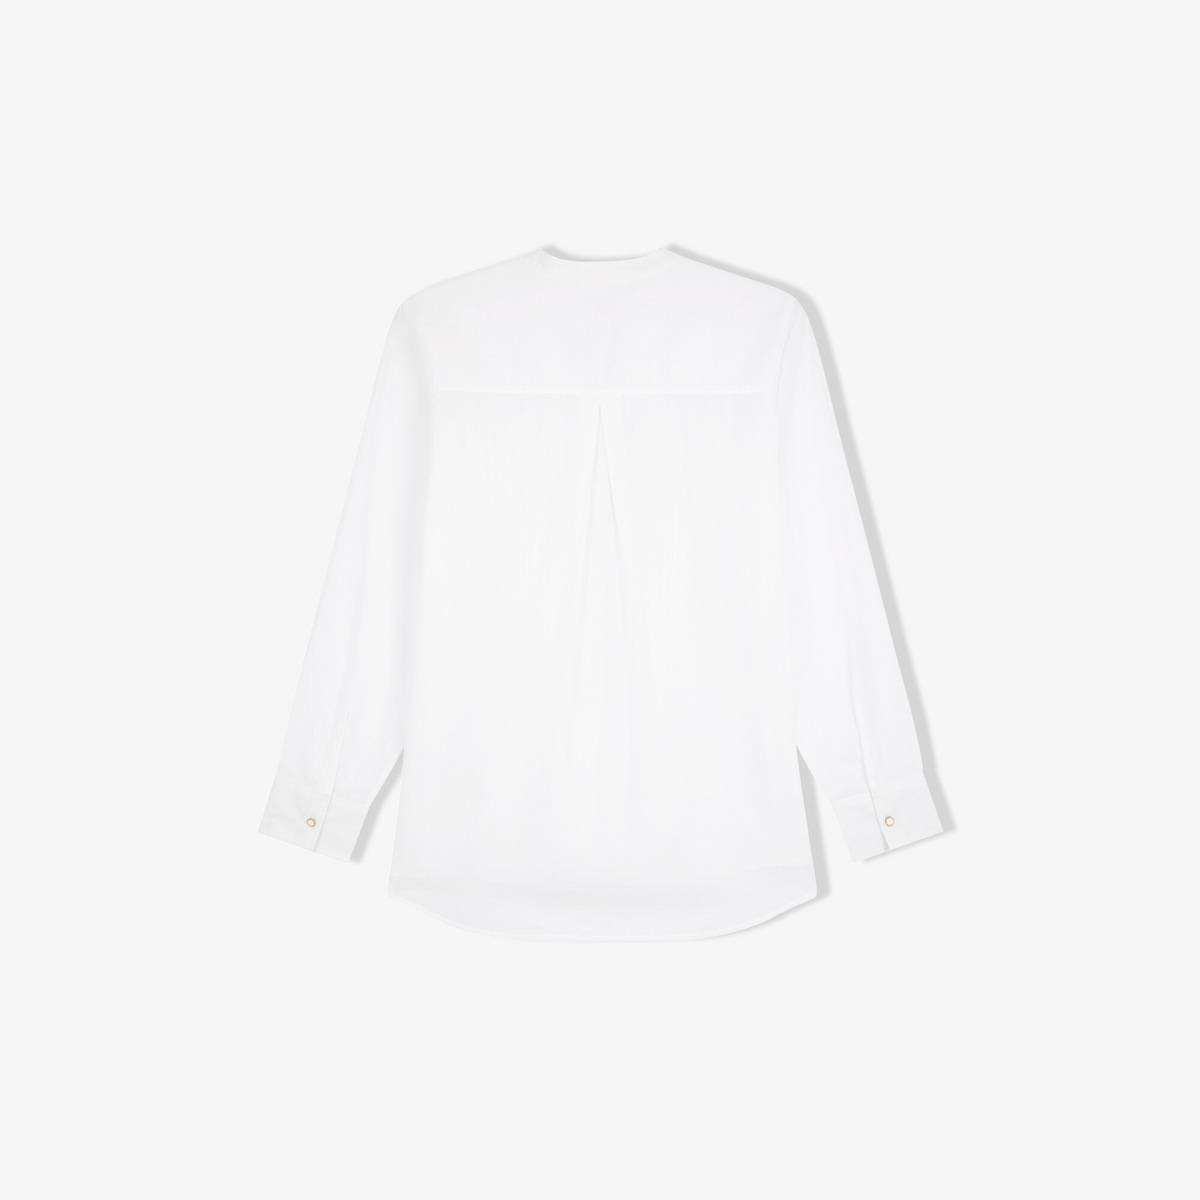 Ellea bib blouse, White - Lightweight cotton voile - image 2